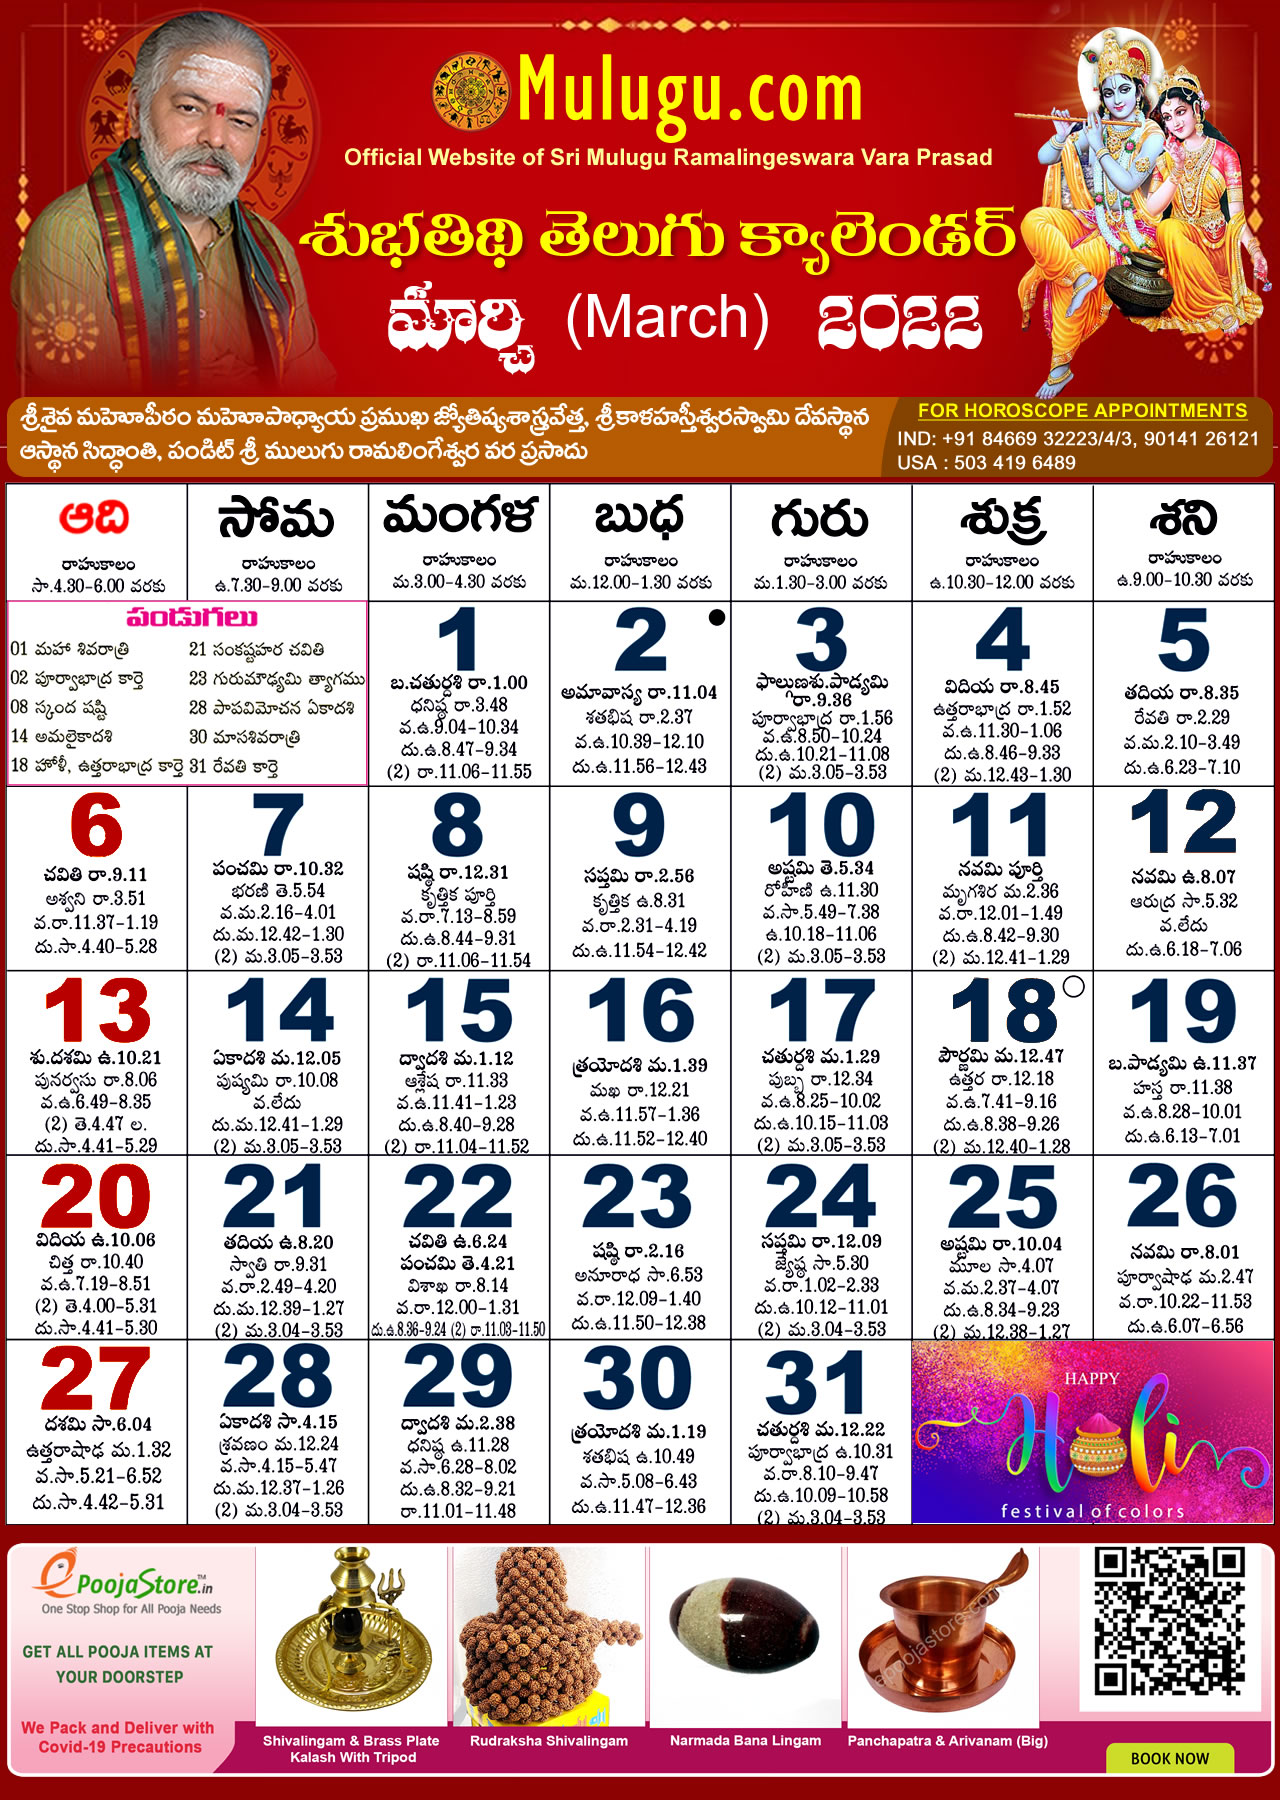 Telugu 2022 Calendar Subhathidi March Telugu Calendar 2022 | Telugu Calendar 2022 - 2023 | Telugu  Subhathidi Calendar 2022 | Calendar 2022 | Telugu Calendar 2022 |  Subhathidi Calendar 2022 | Chicago Calendar 2022 |